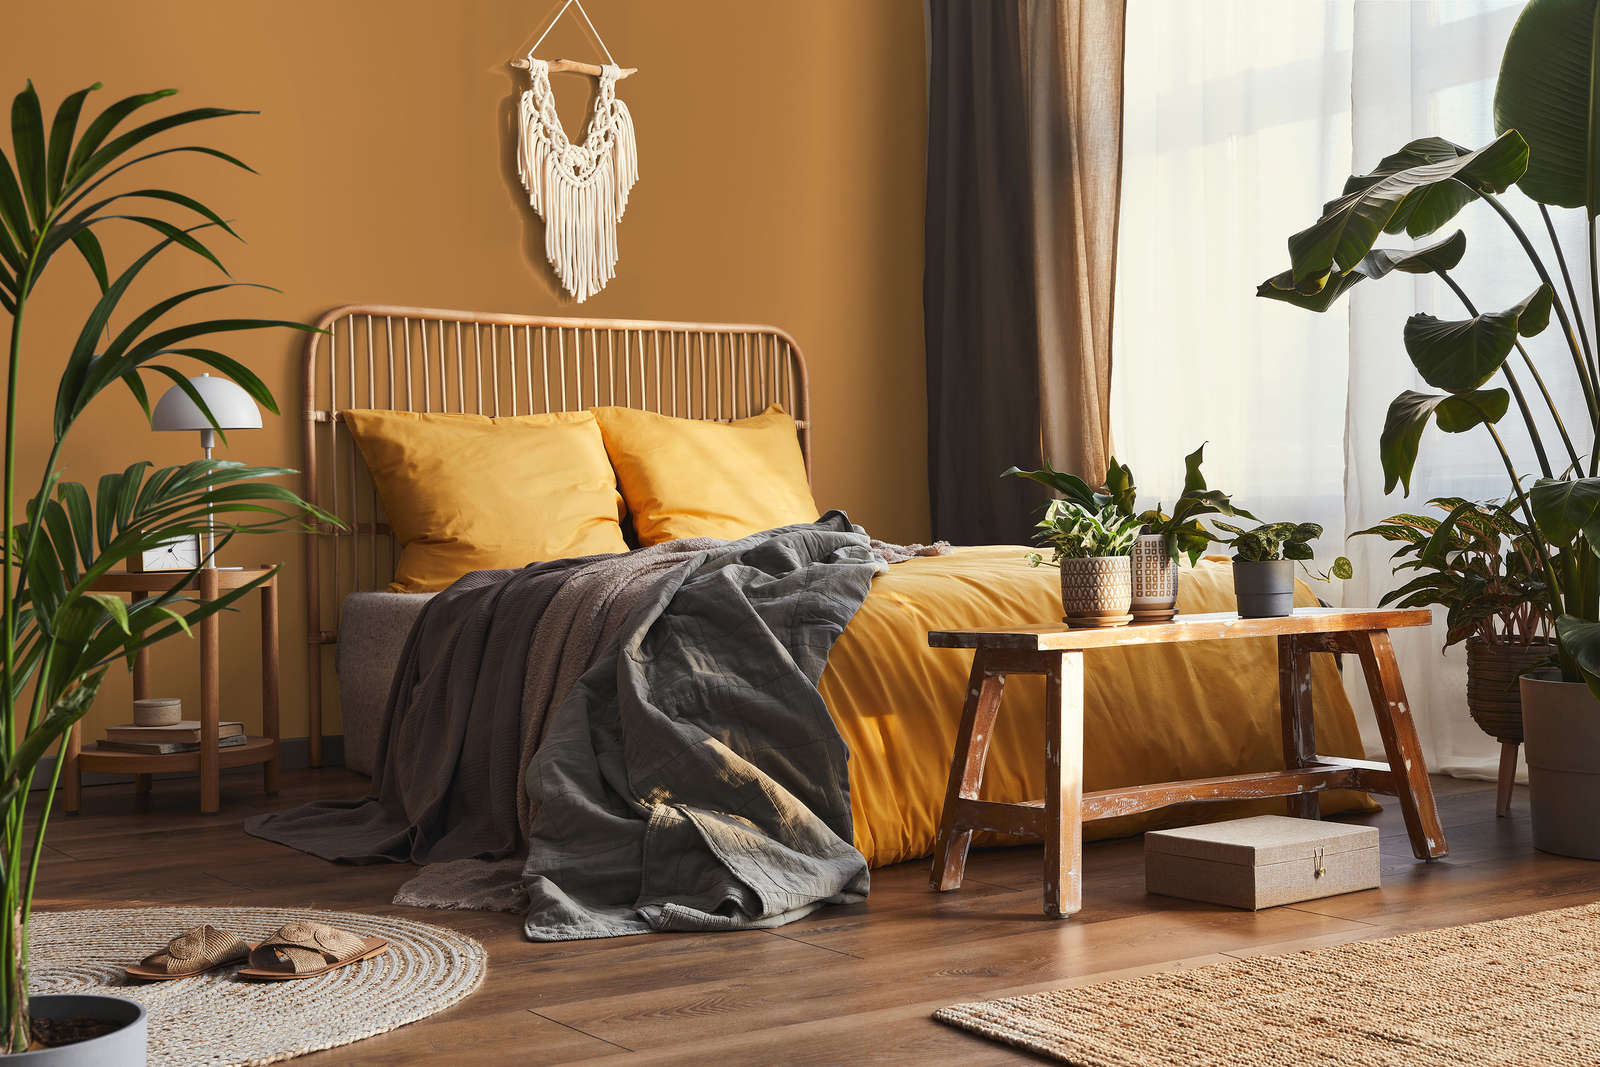             Premium Wall Paint strong light brown »Beige Orange/Sassy Saffron« NW814 – 5 litre
        